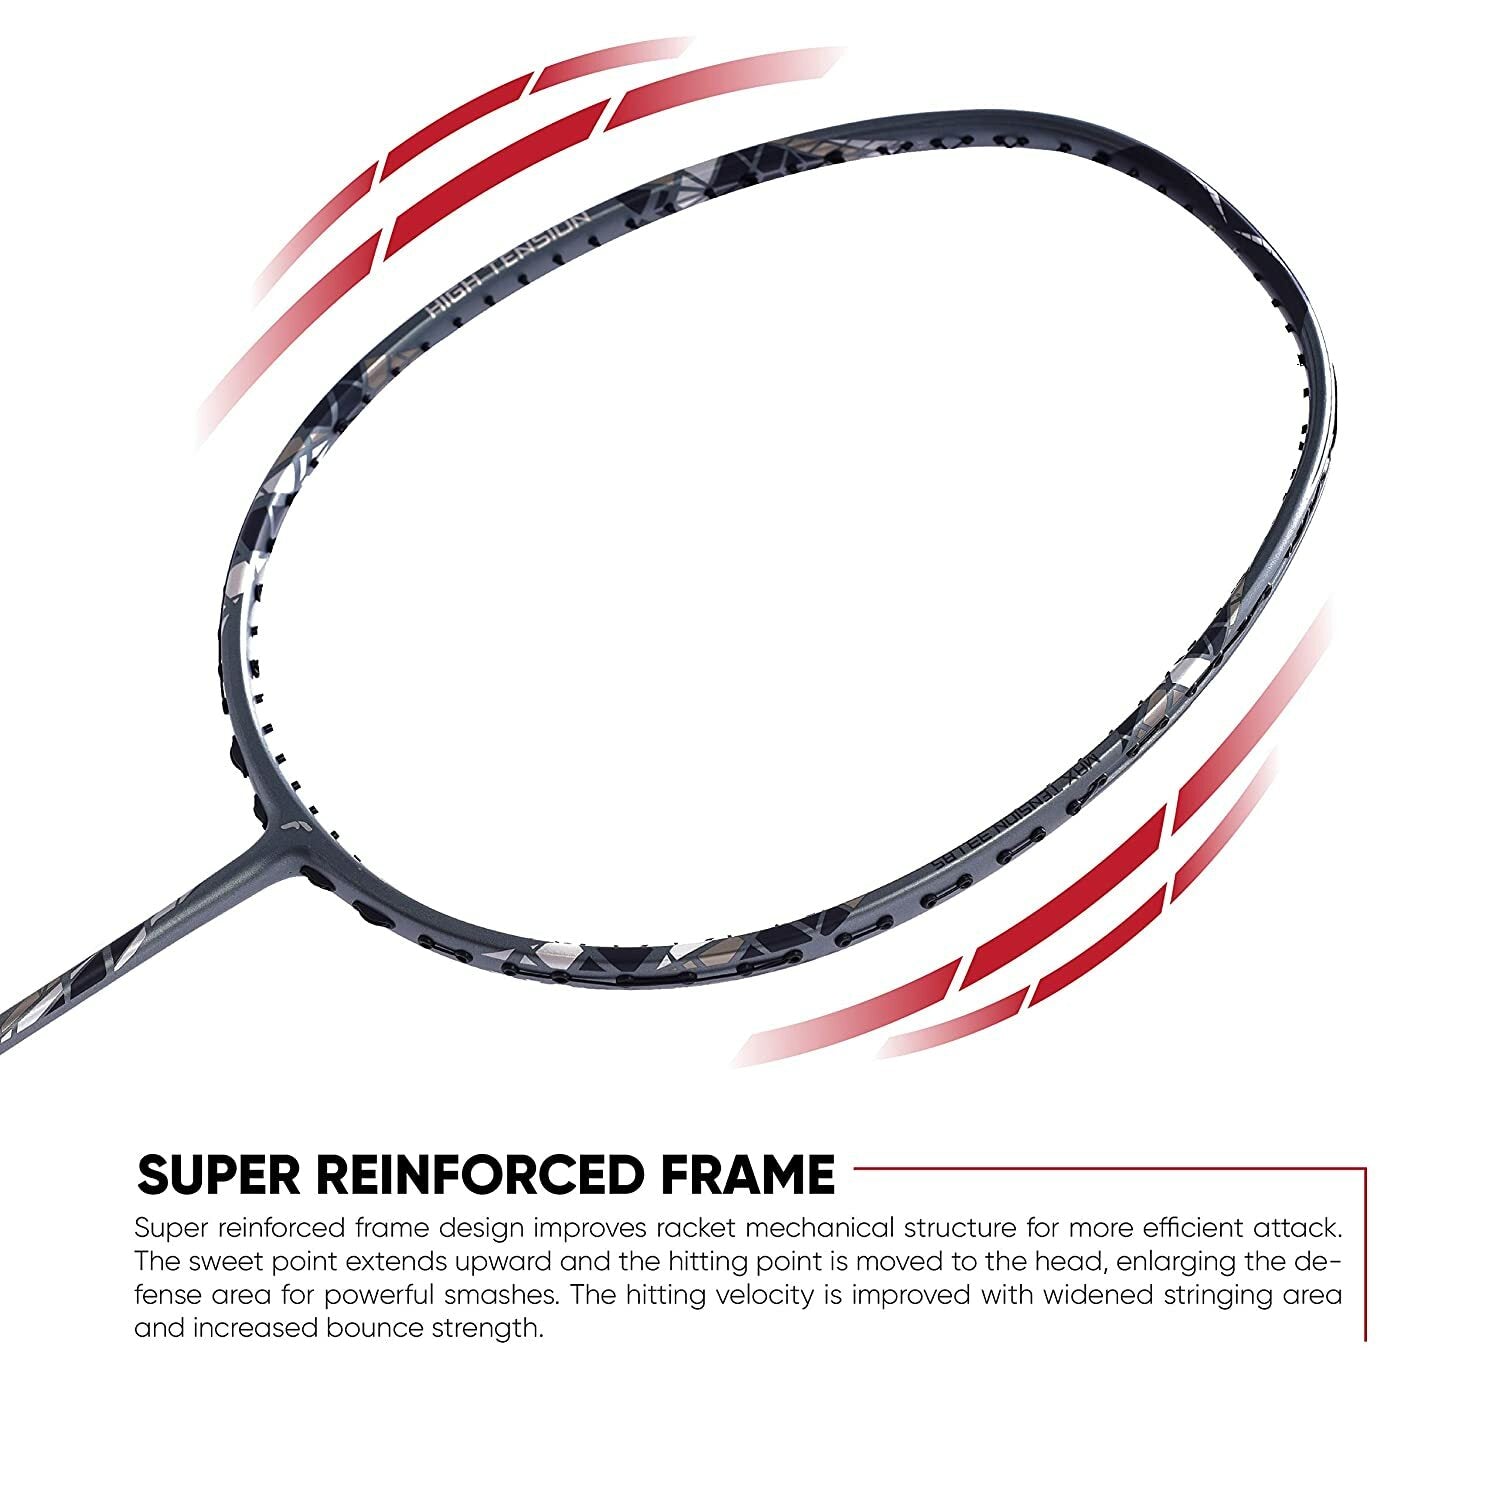 Flex Power Fierce 35 Mega Tension - 33LBS Full Graphite Badminton Racquet with Full Racket Cover Grey, Silver